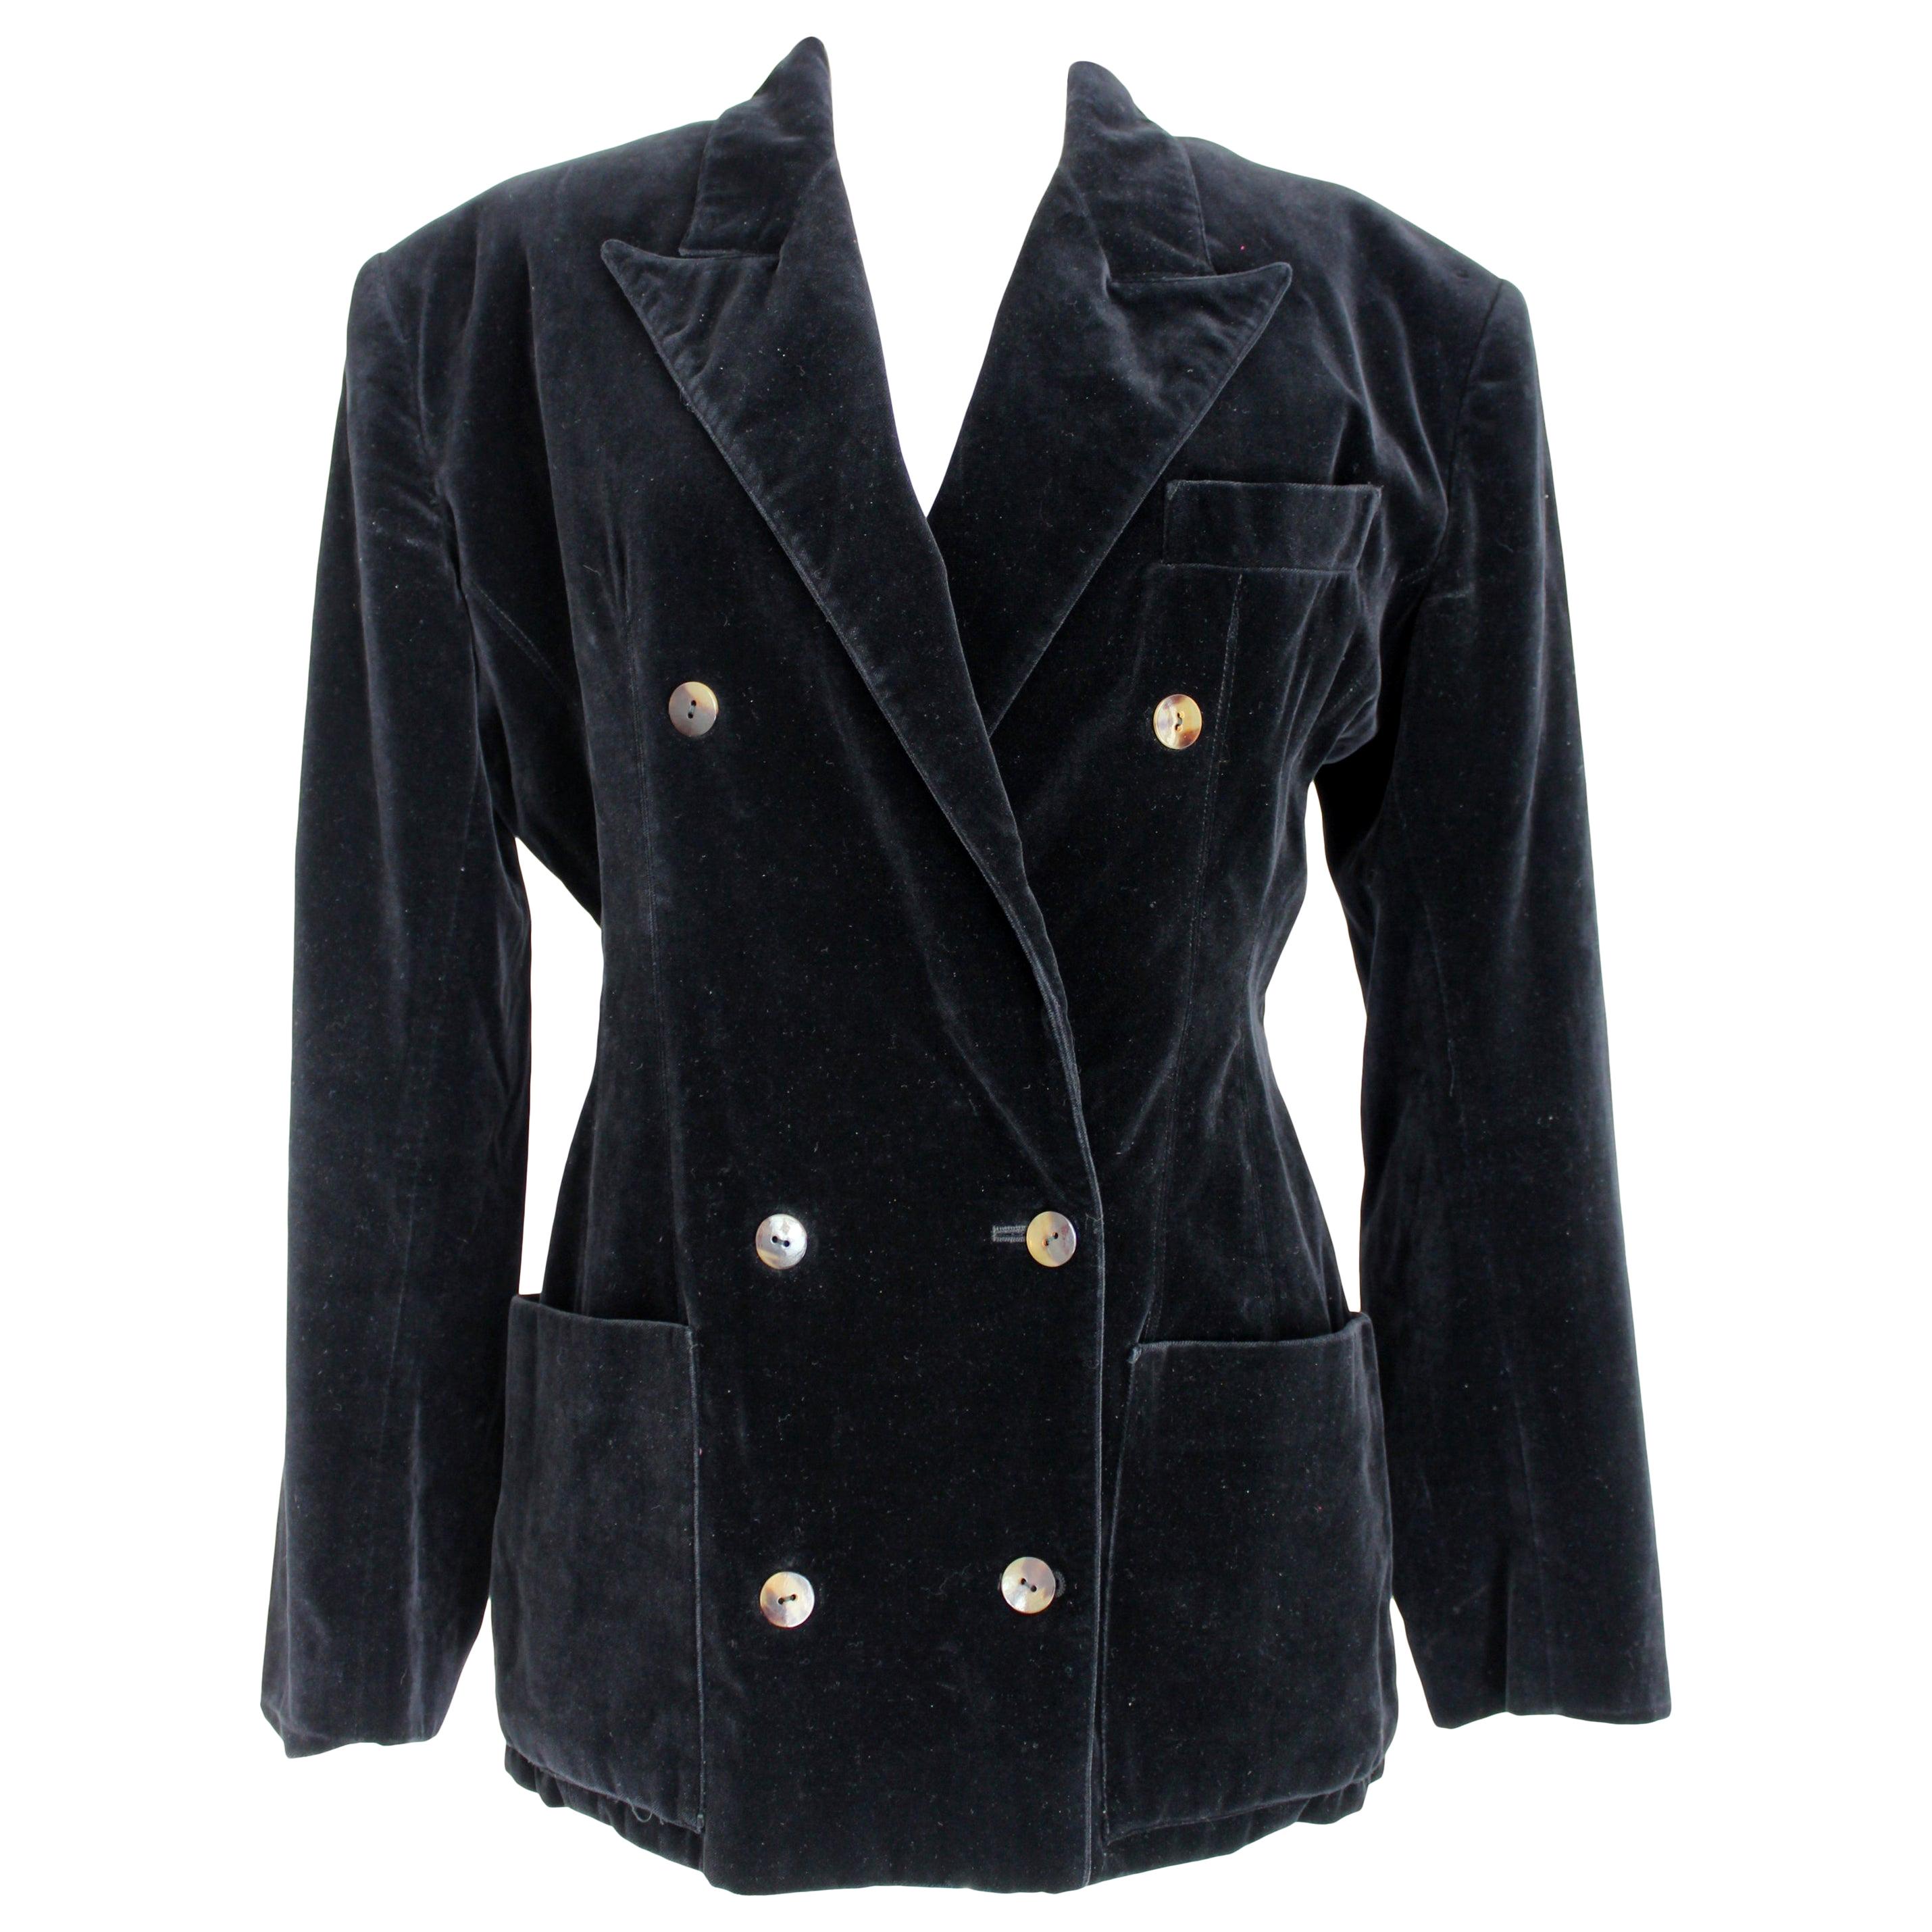 Jean Paul Gaultier 1980s Black Velvet Double Breasted Classic Vintage Jacket